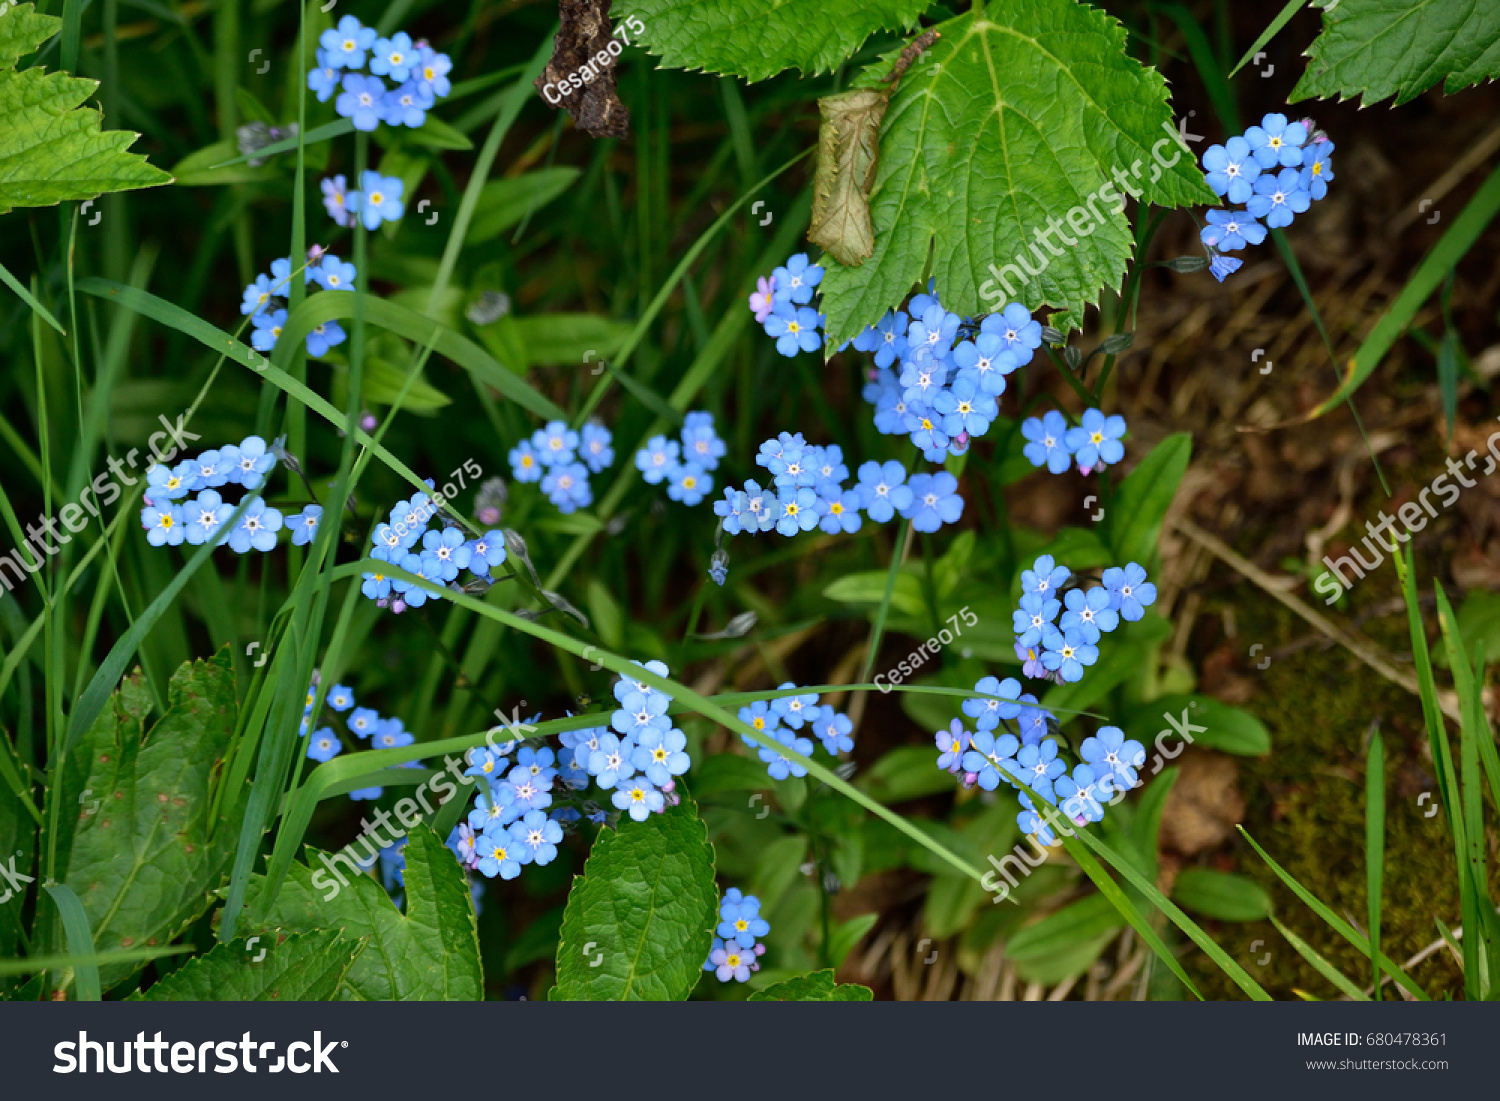 Forgetmenot Myosotis Flower Val Duron Alps Animals Wildlife Stock Image 680478361